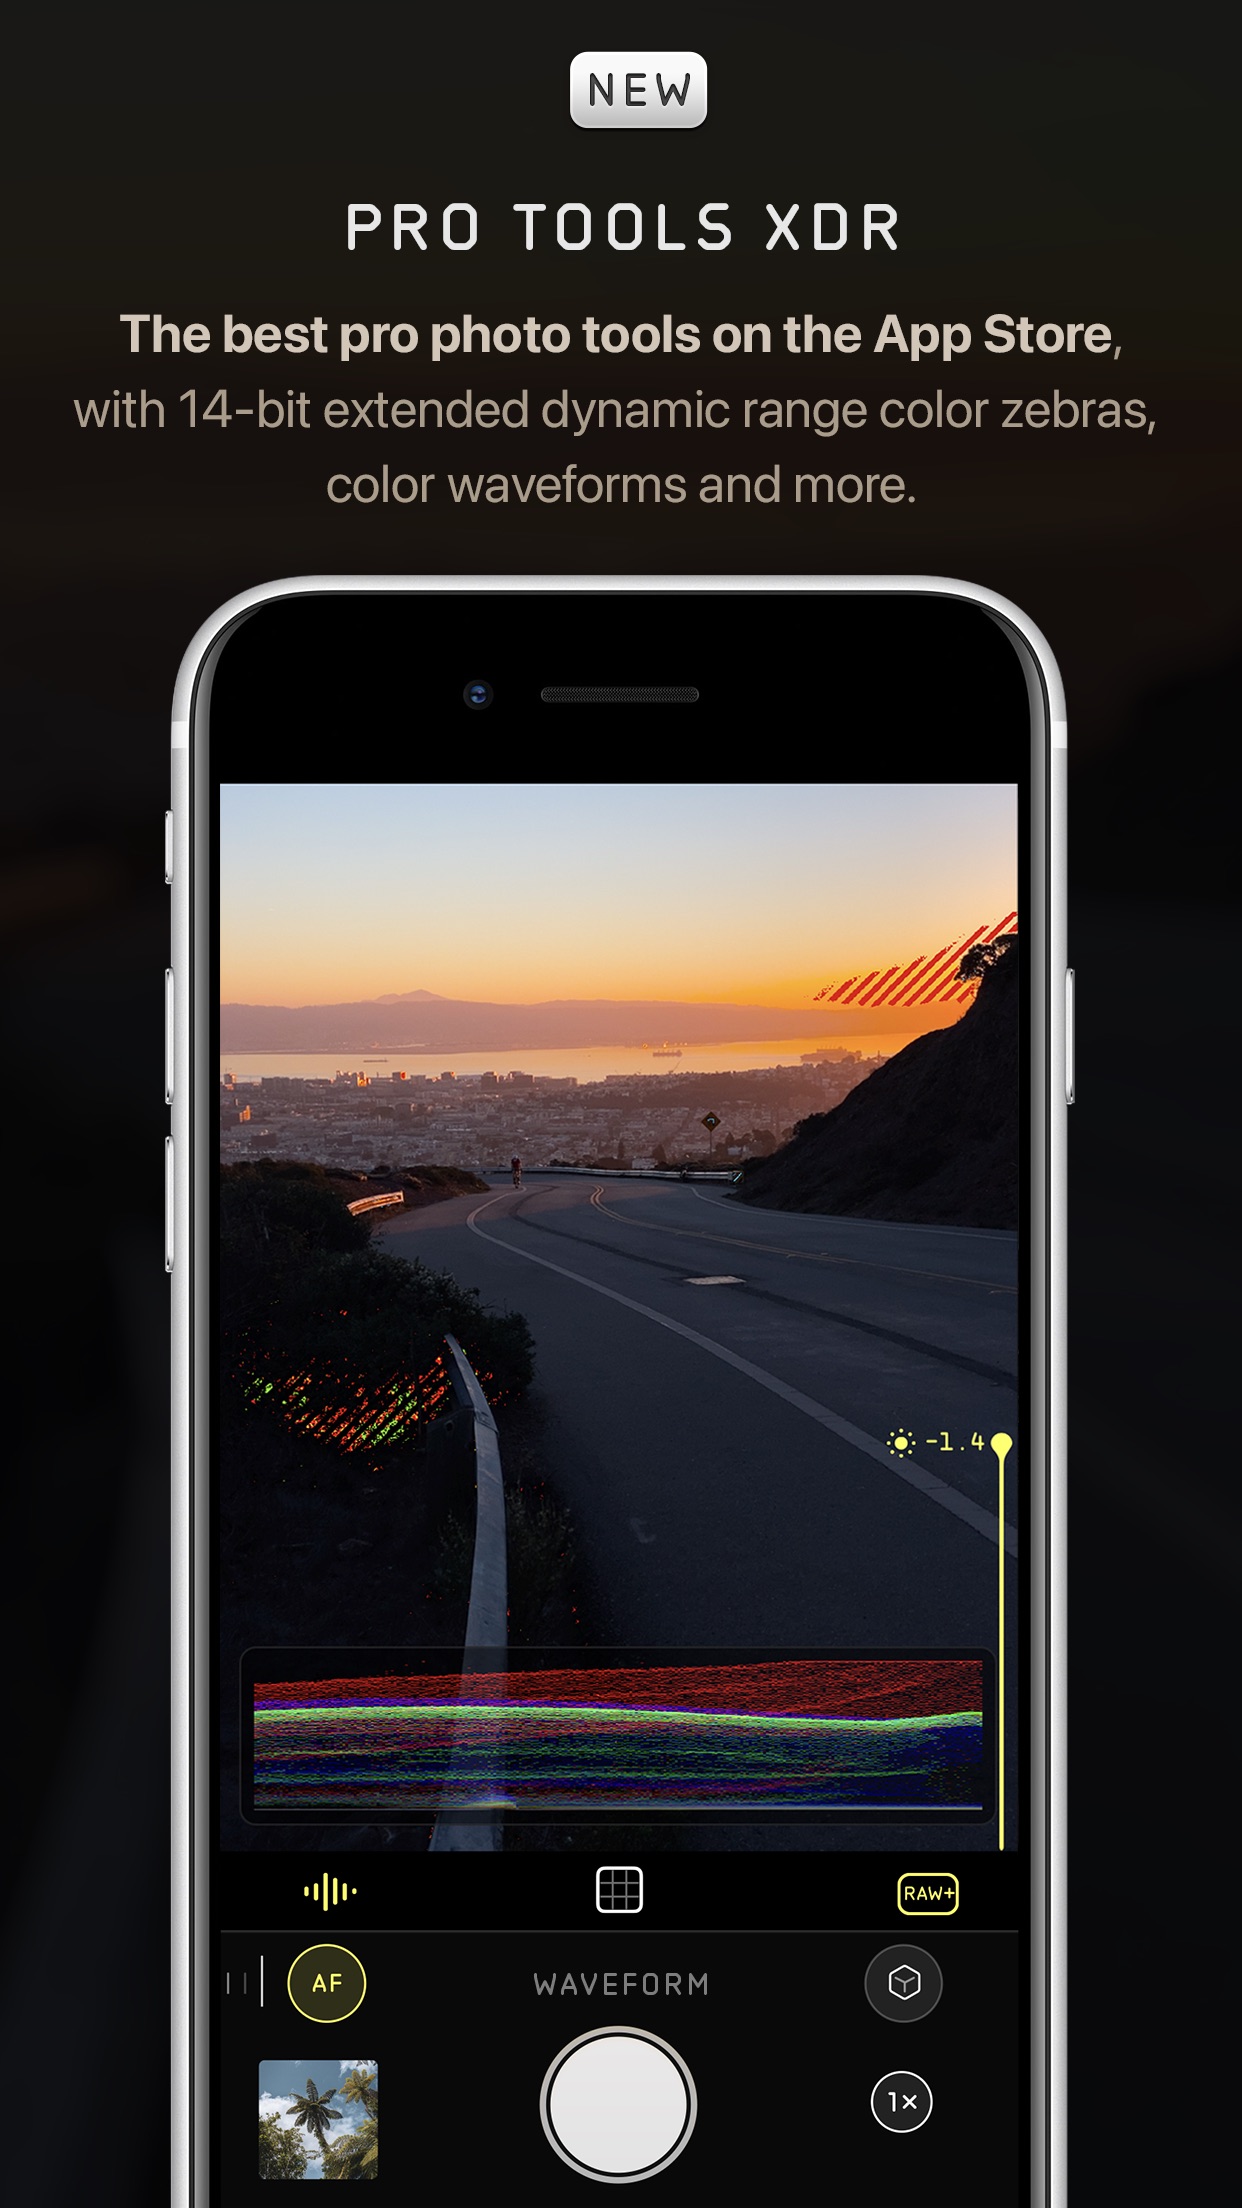 Screenshot do app Halide Mark II - Pro Camera